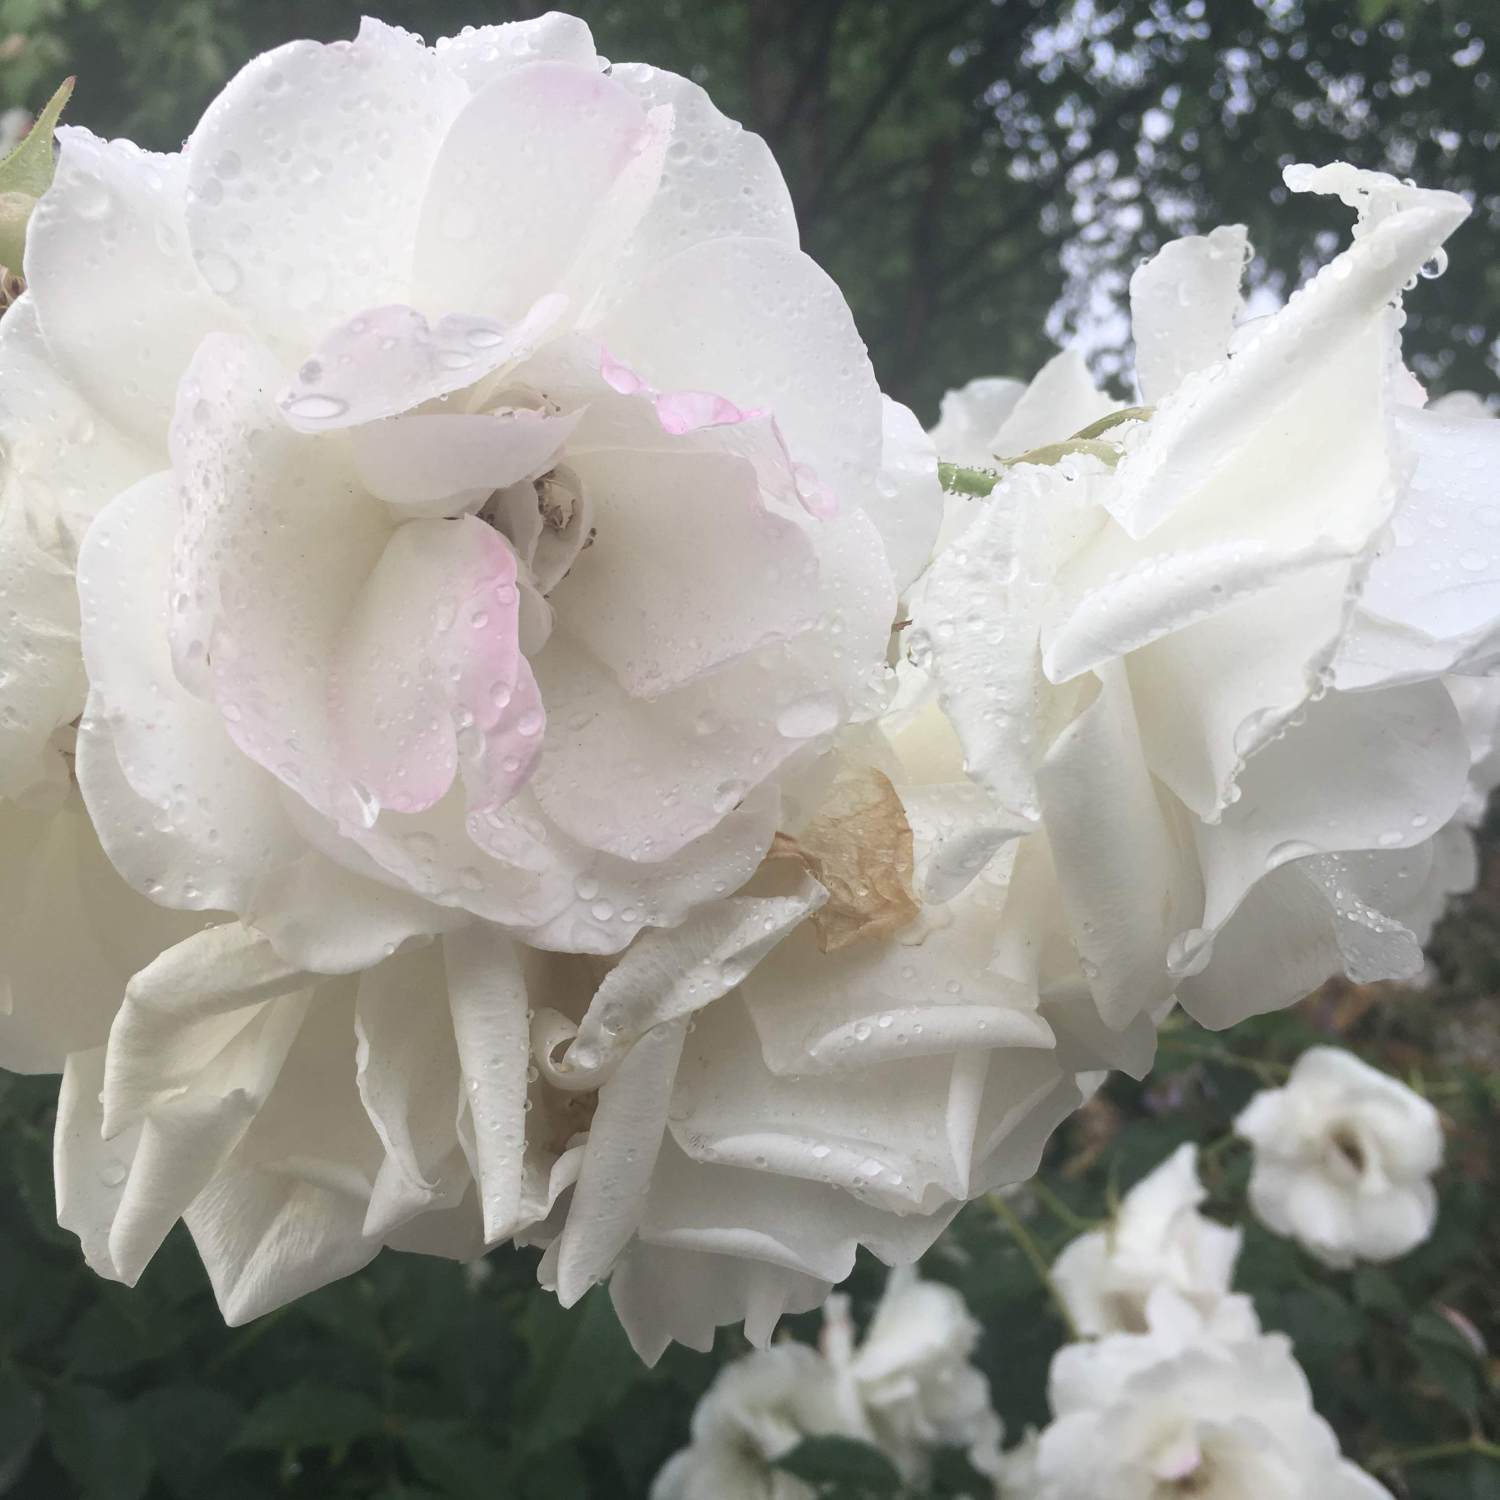 Dewy white roses